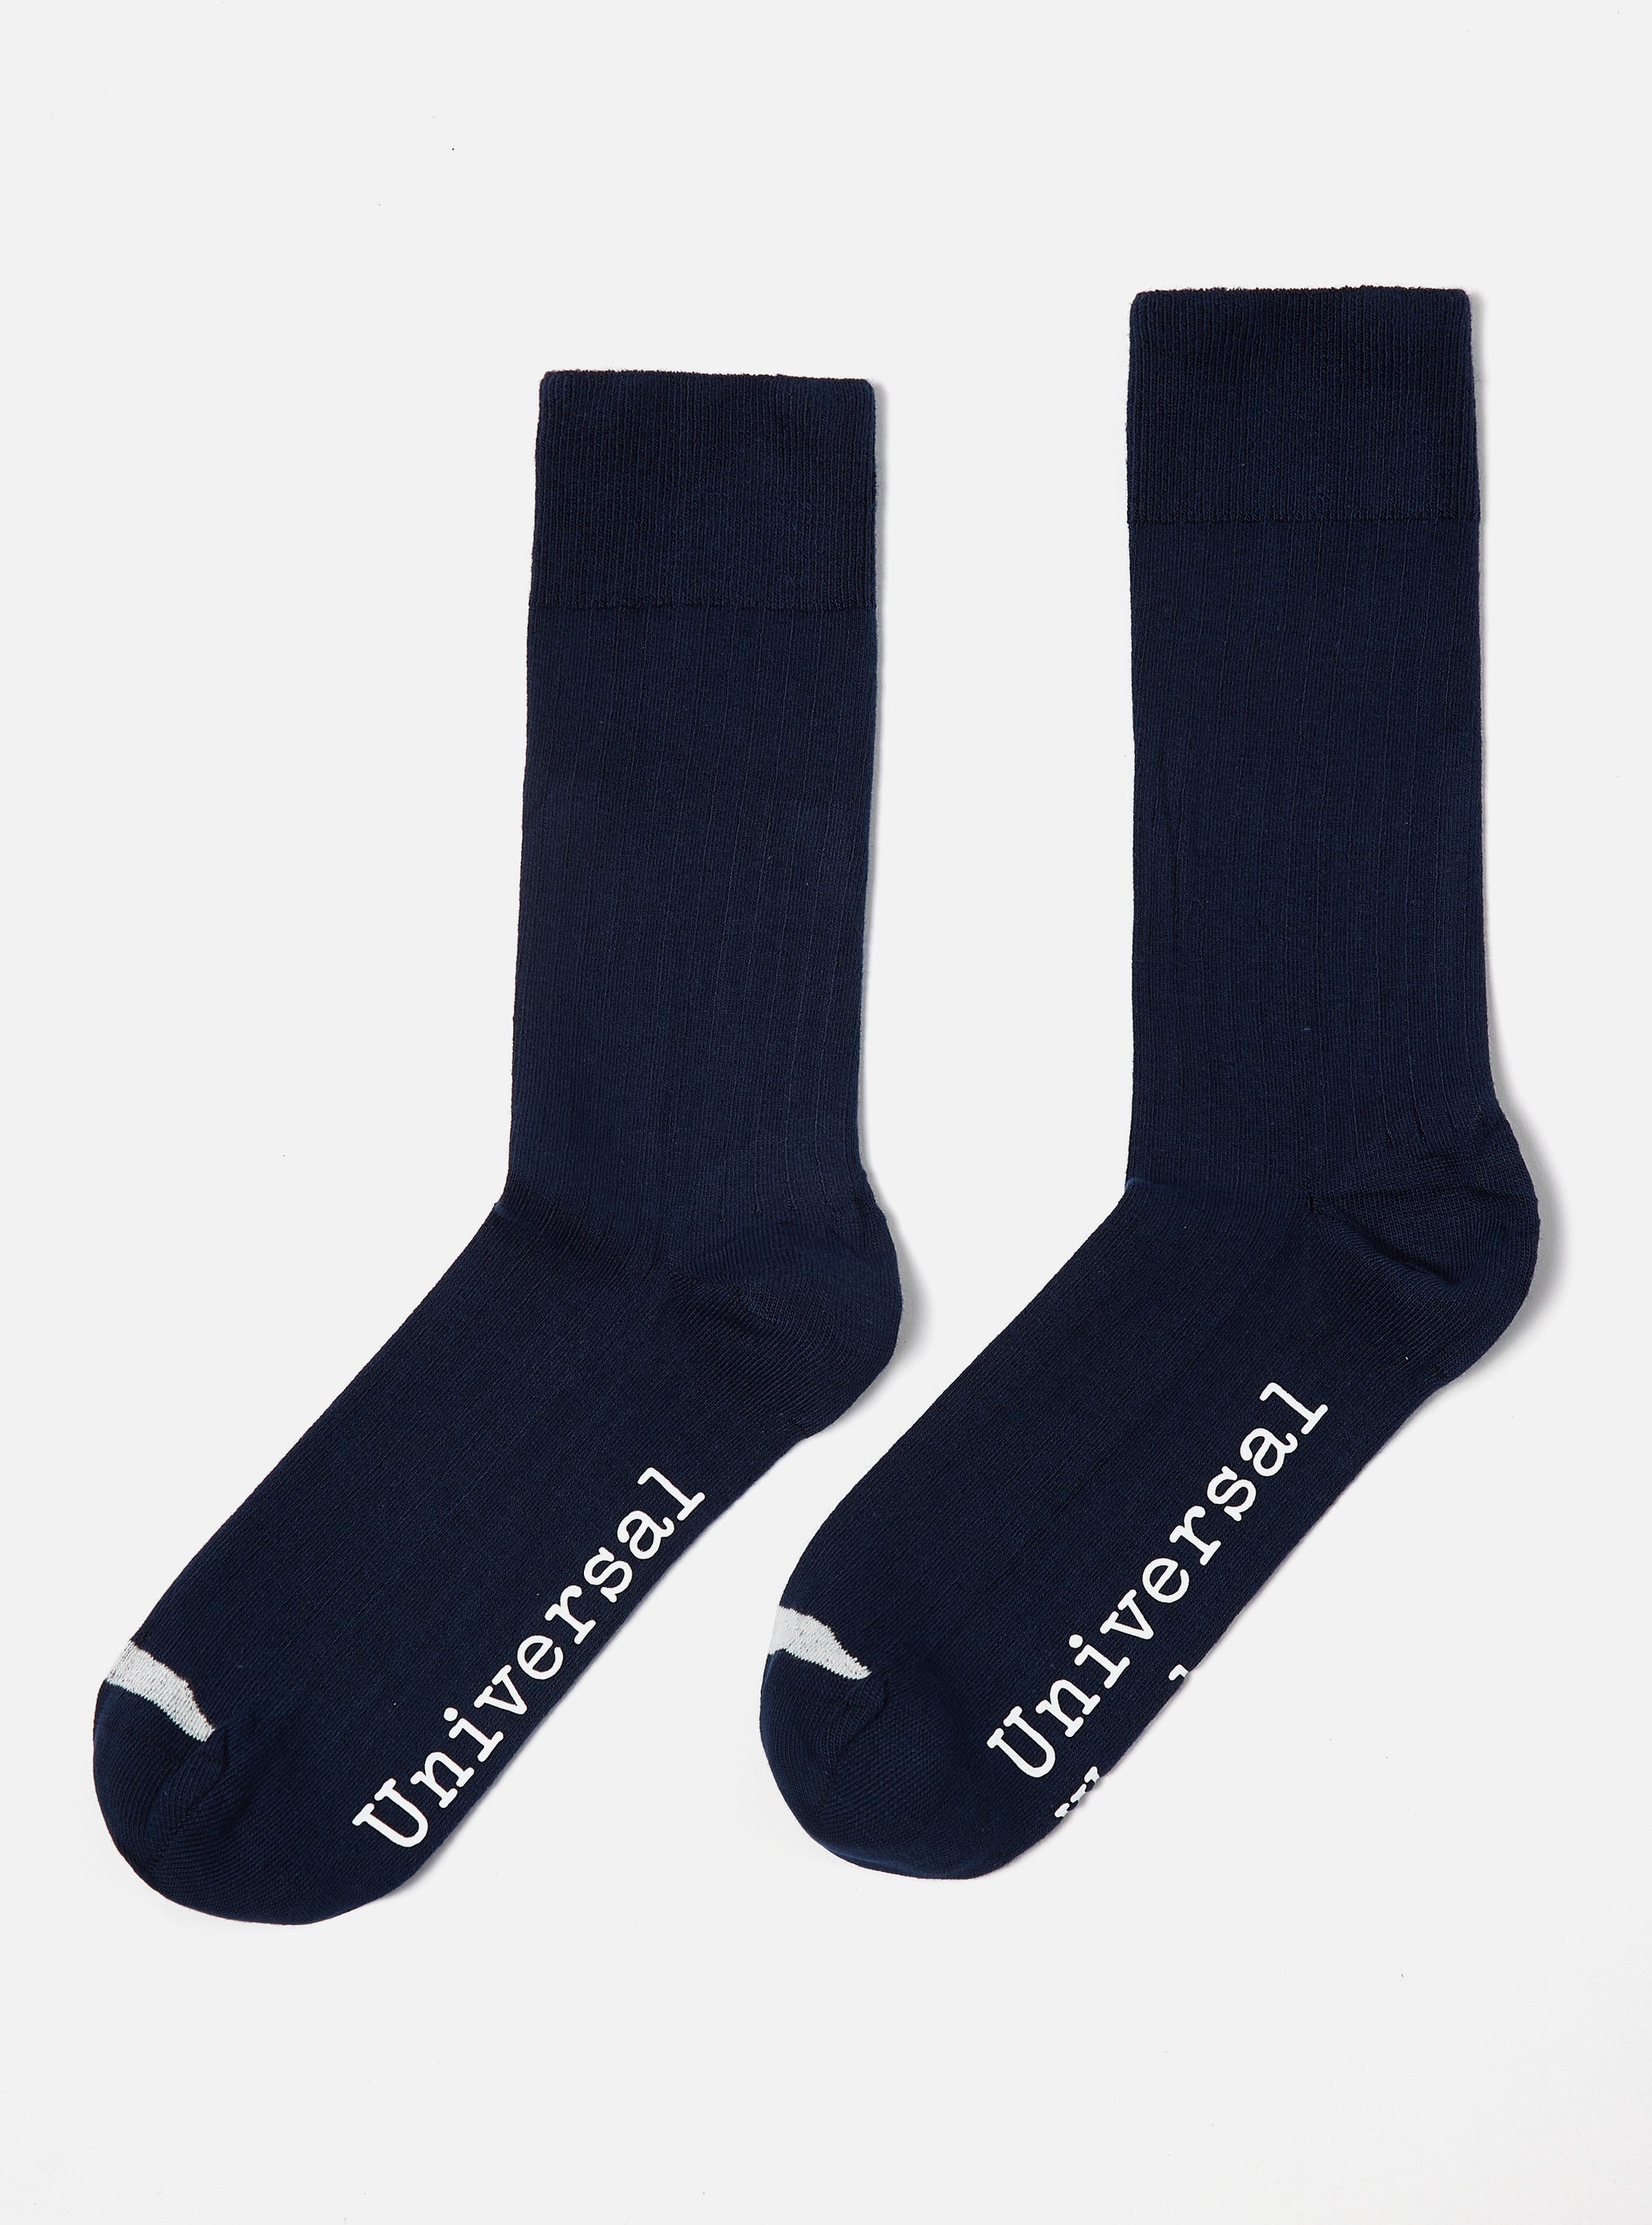 Universal Works 3 Pack Modal Sock in Black/Navy/Cumin Rib Knit